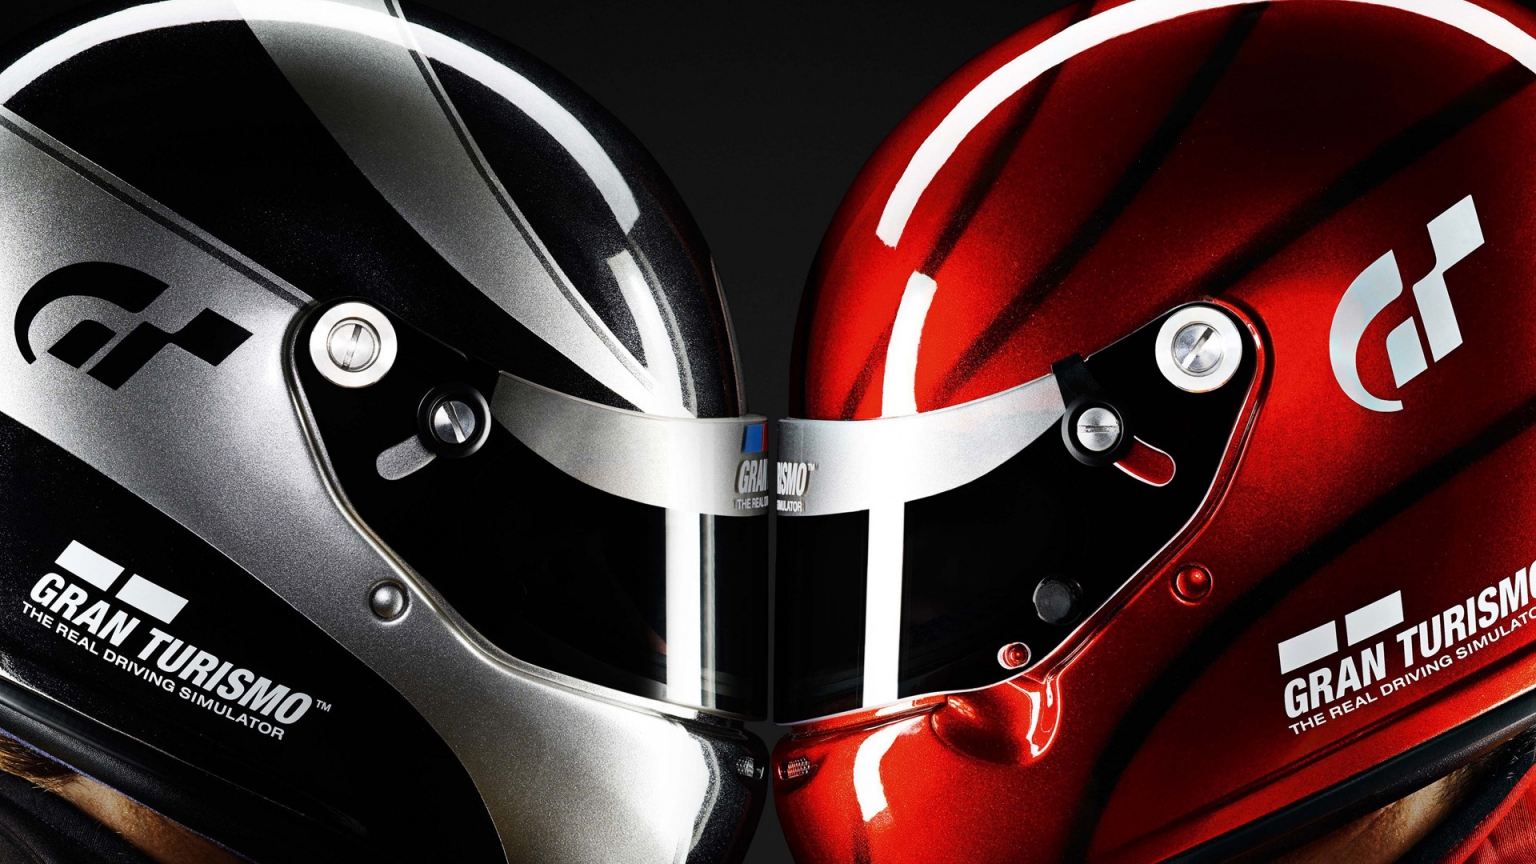 Gran Turismo Helmets for 1536 x 864 HDTV resolution